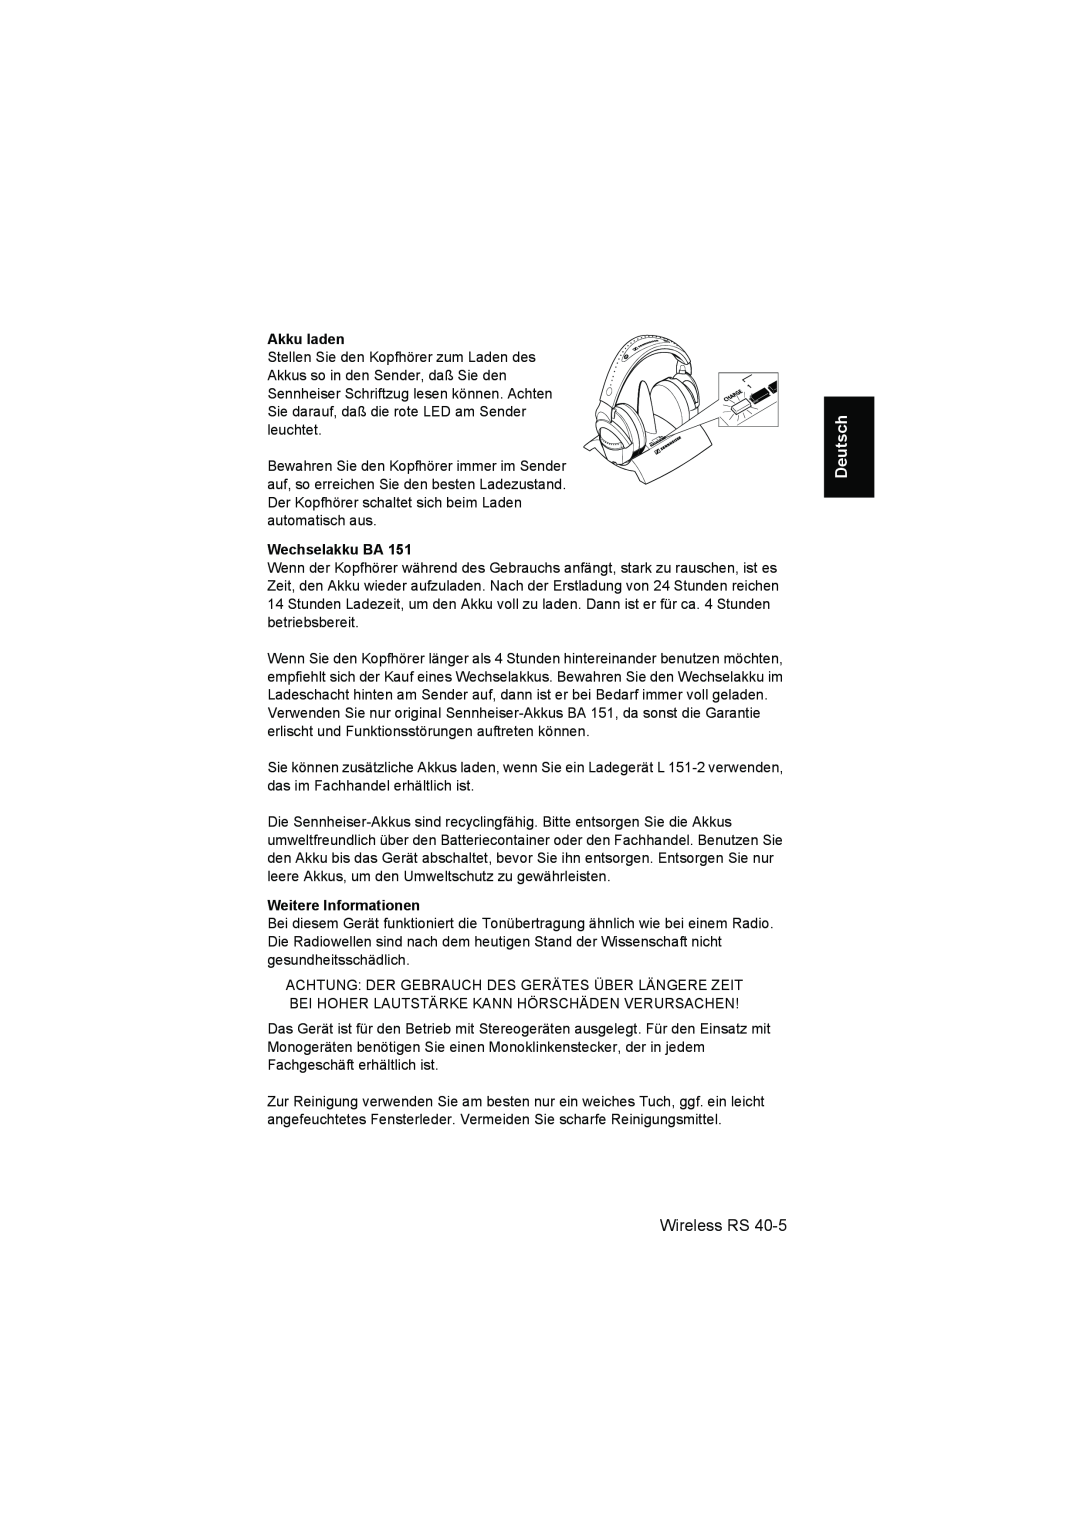 Sennheiser RS 40 instruction manual Akku laden, Wechselakku BA, Weitere Informationen, Deutsch, Wireless RS 